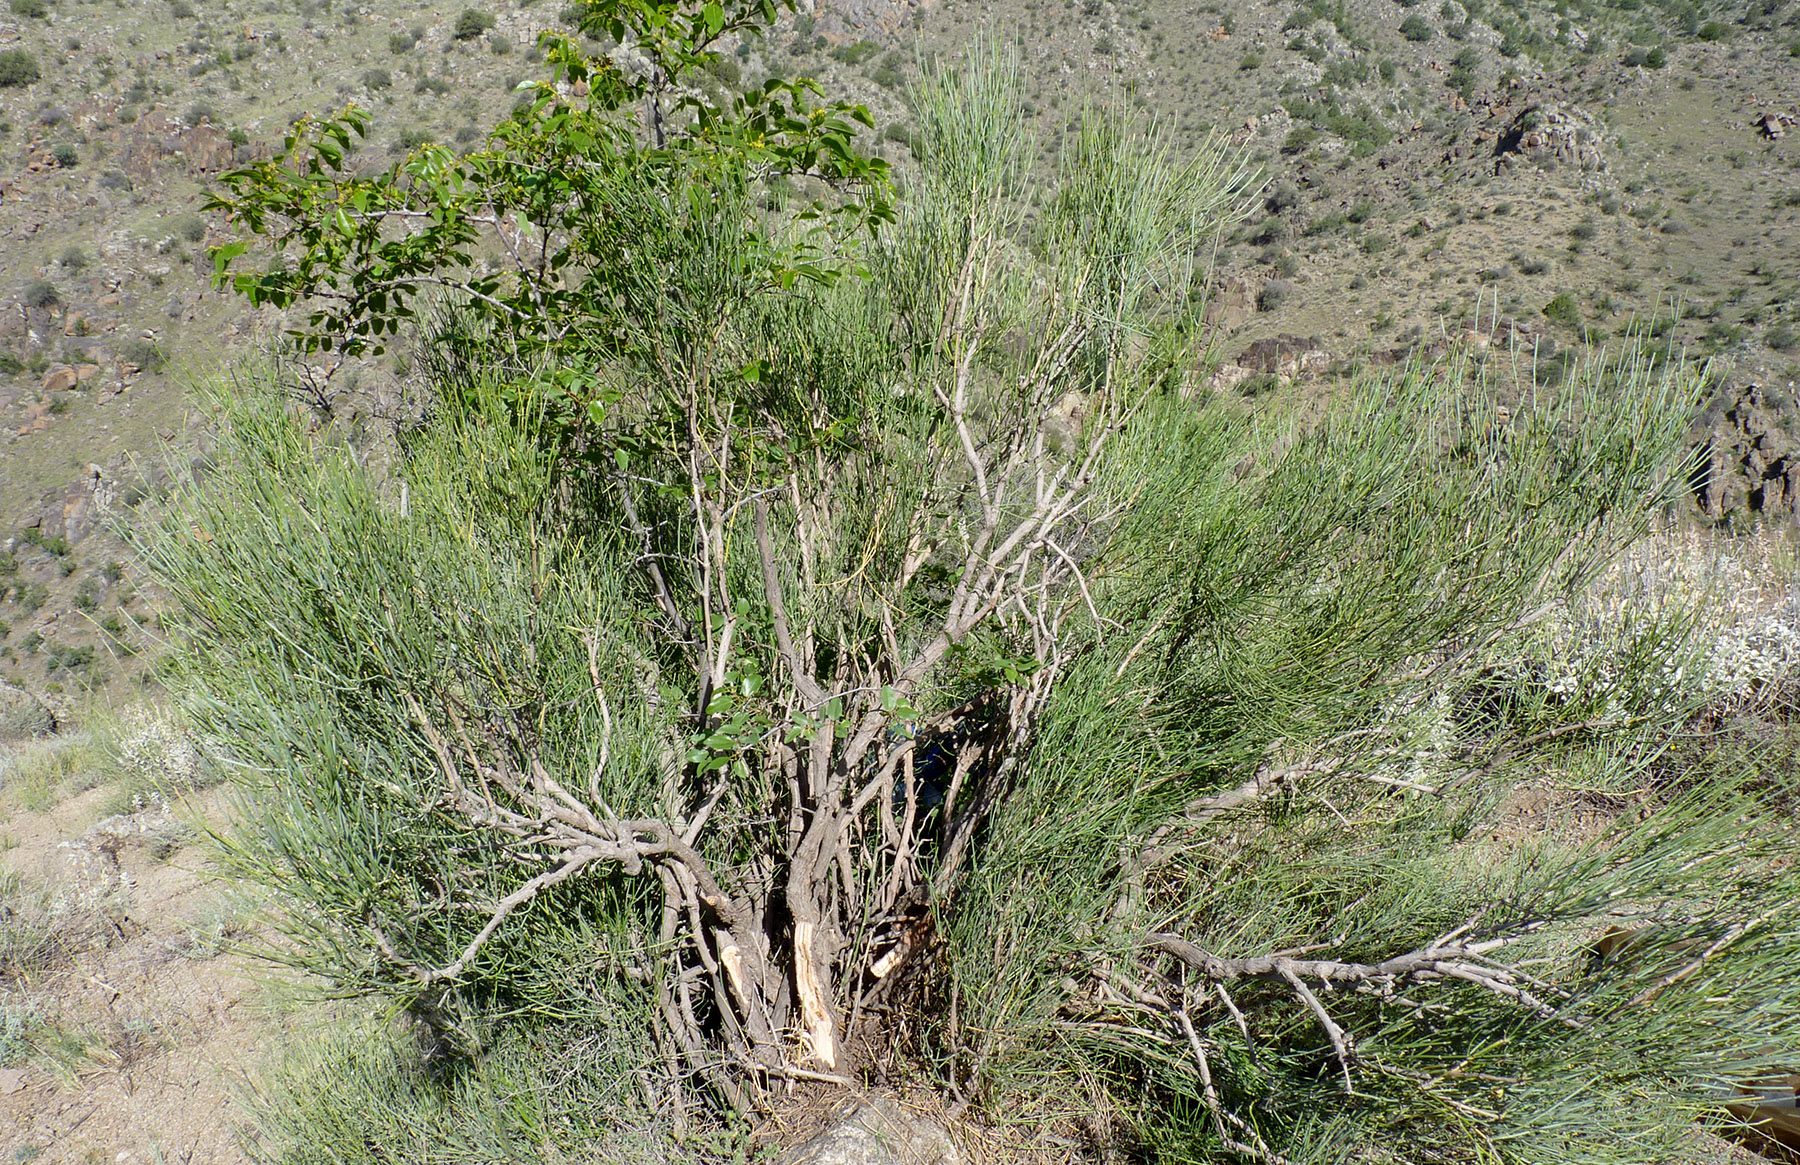 Anoplistes agababiani - habitat